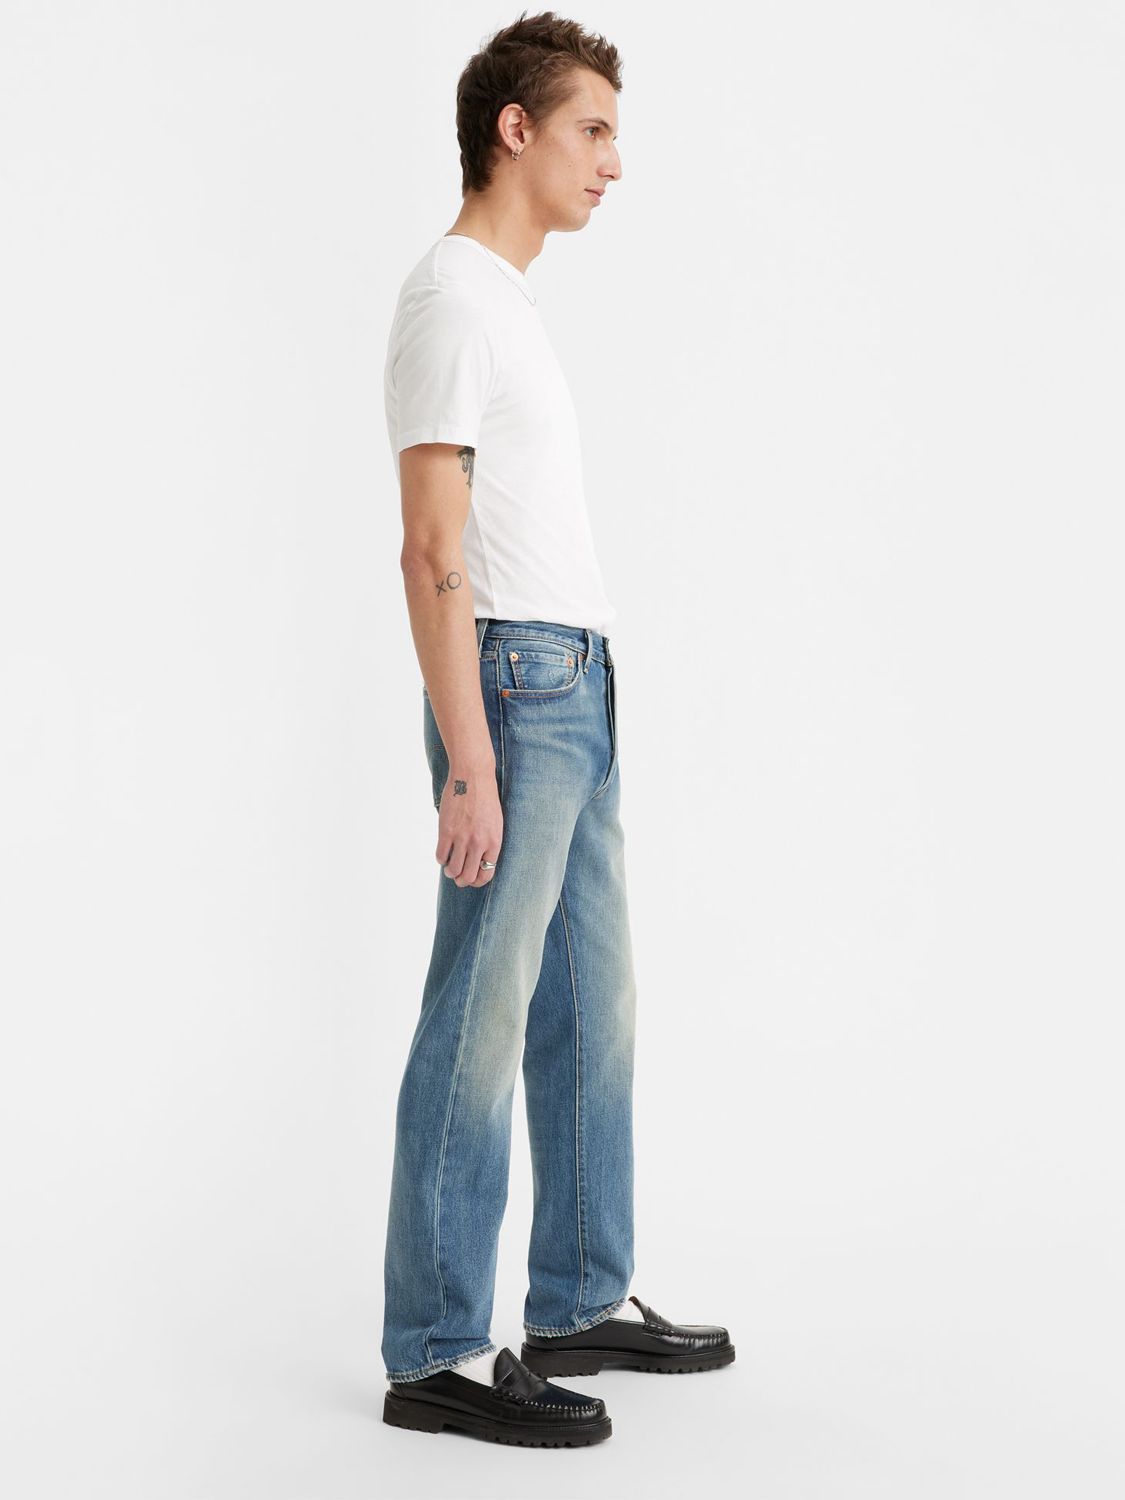 Levi's 501 Original Straight Jeans, Misty Lake at John Lewis & Partners